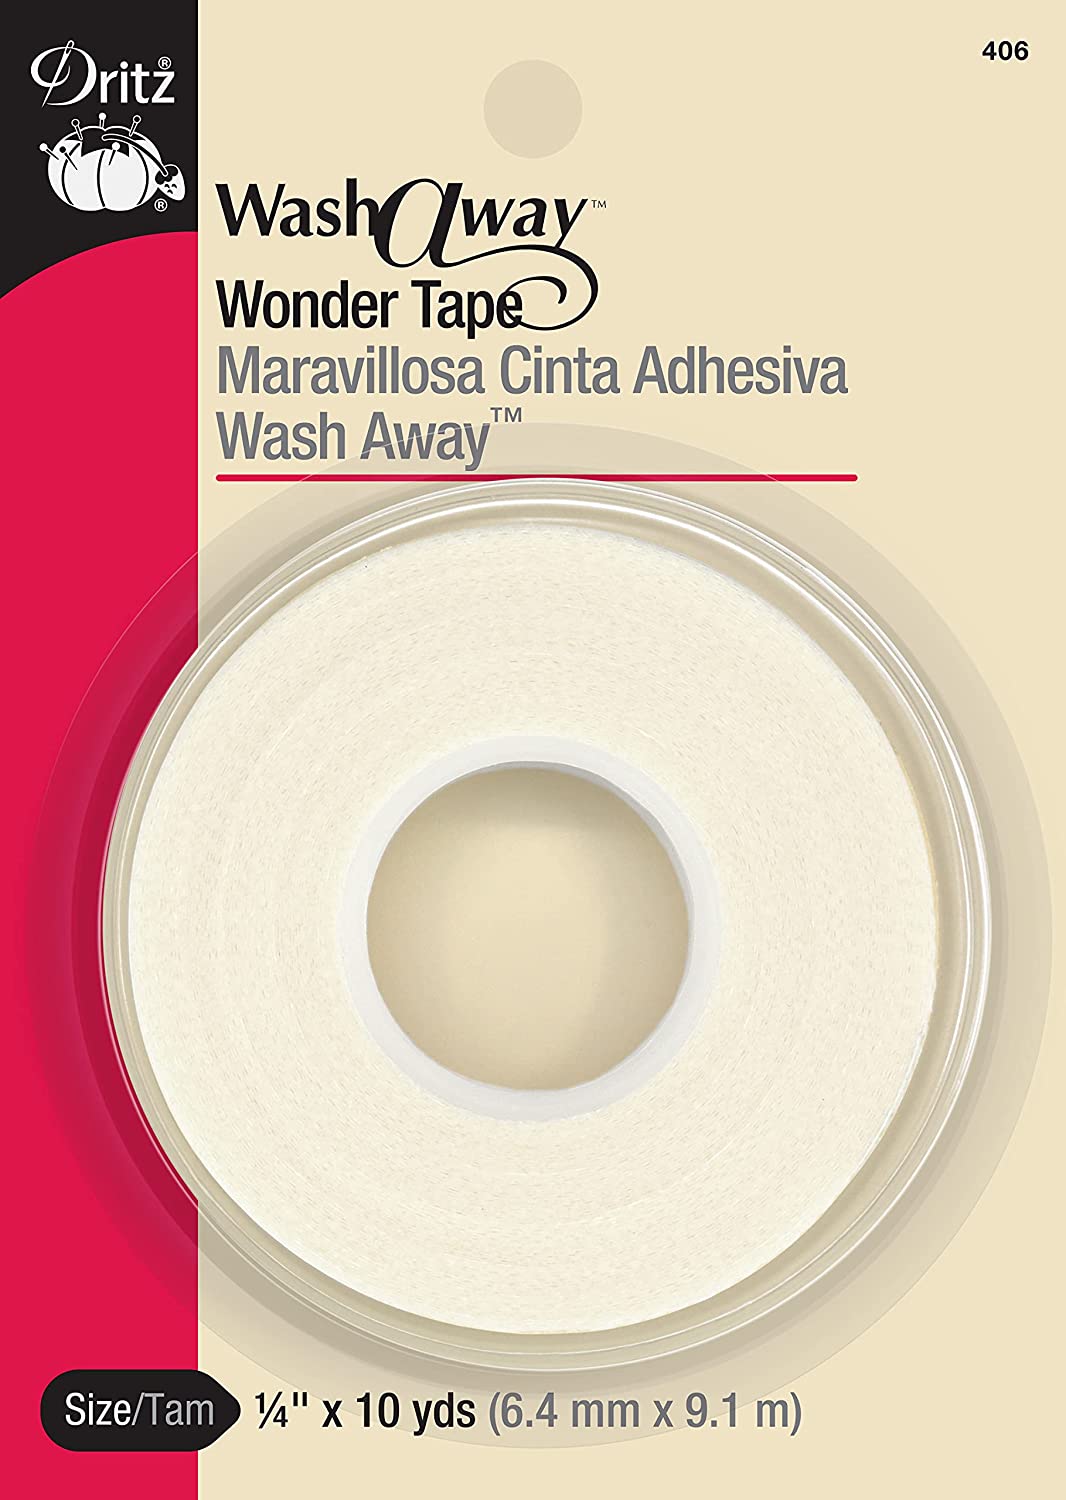 Washaway Wonder Tape by Dritz - Kiwi Bagineers